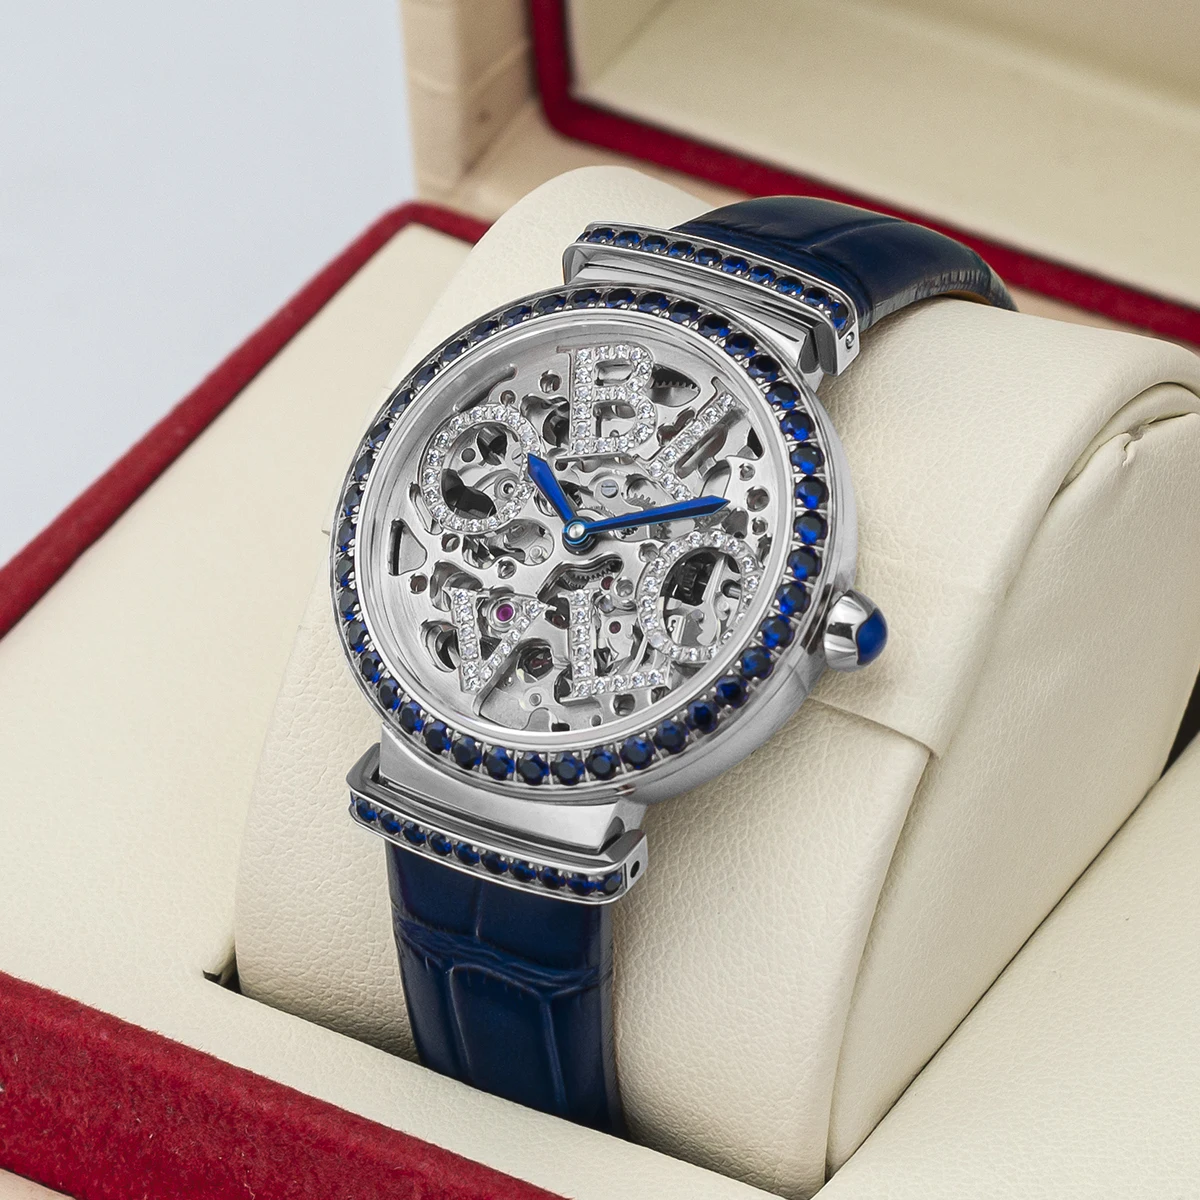 OBLVLO New Design Women Steel Skeleton Automatic Watches Top Brand Luxury Female Wrist Watch Clock Leather Relogio Feminino enlarge